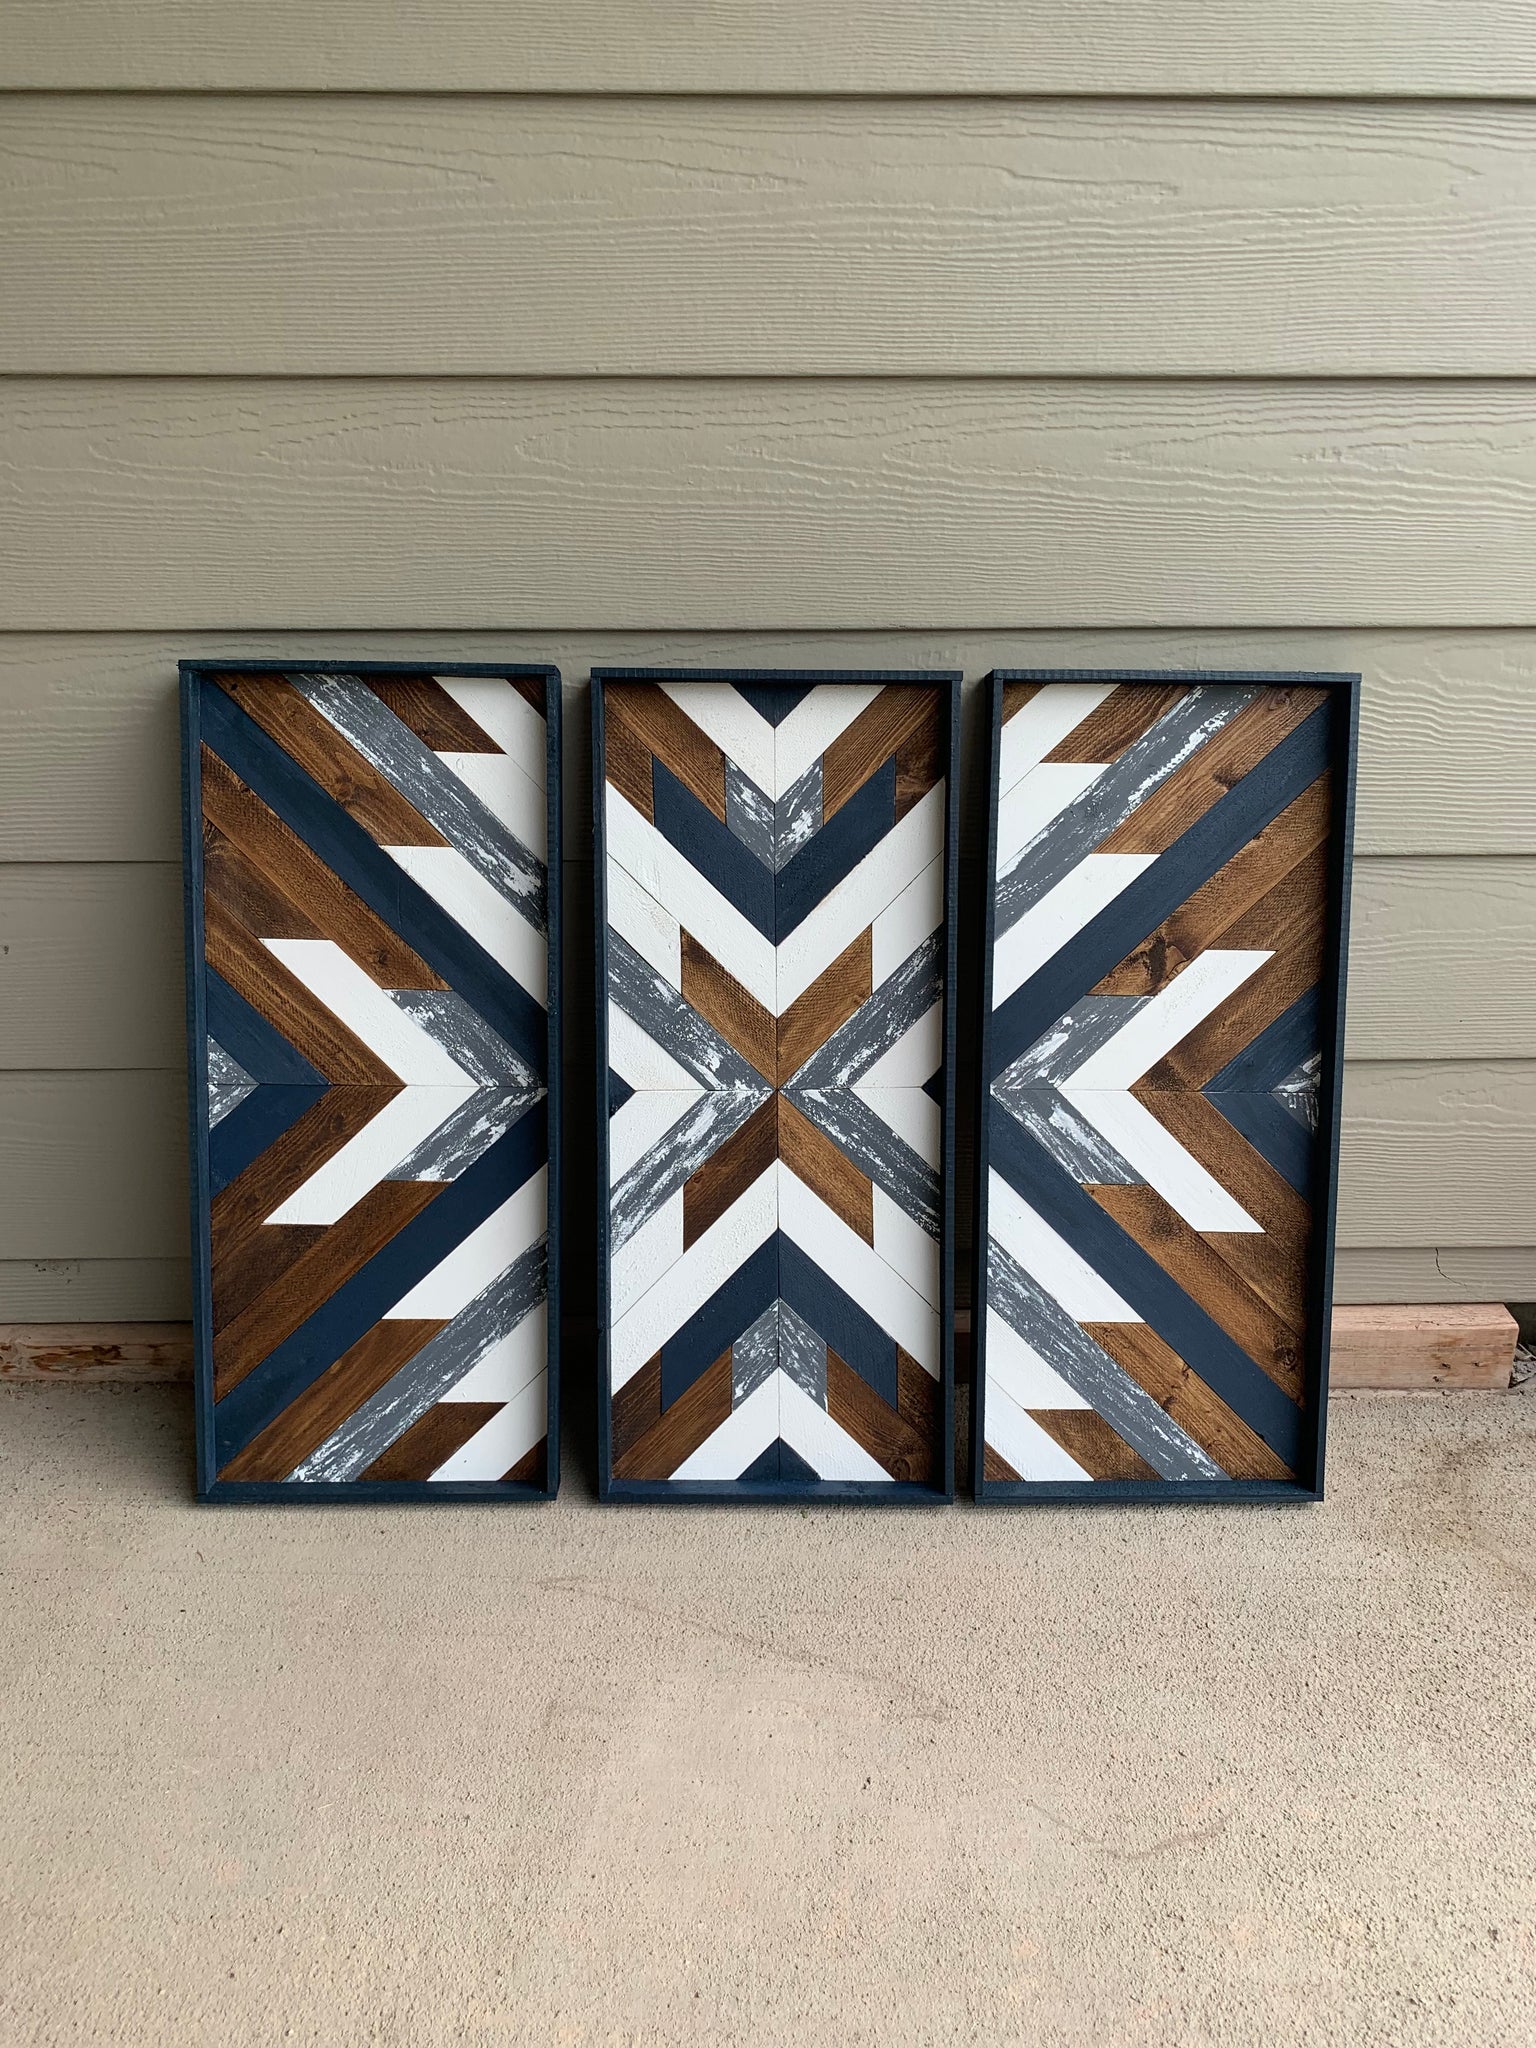 10”x24” 3-piece panel set